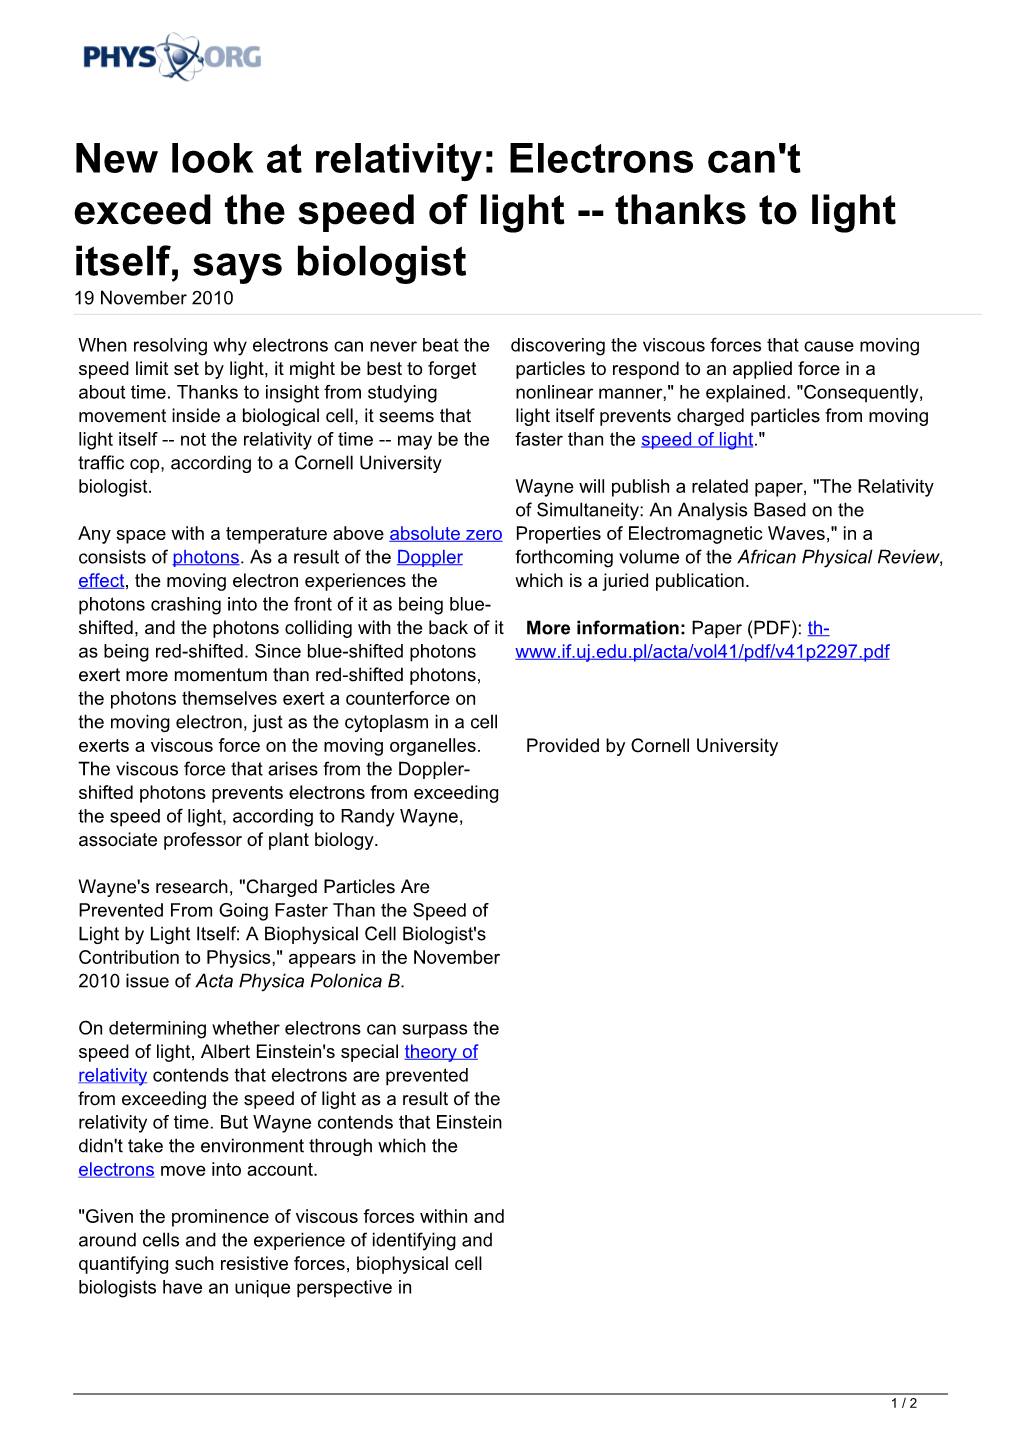 Thanks to Light Itself, Says Biologist 19 November 2010